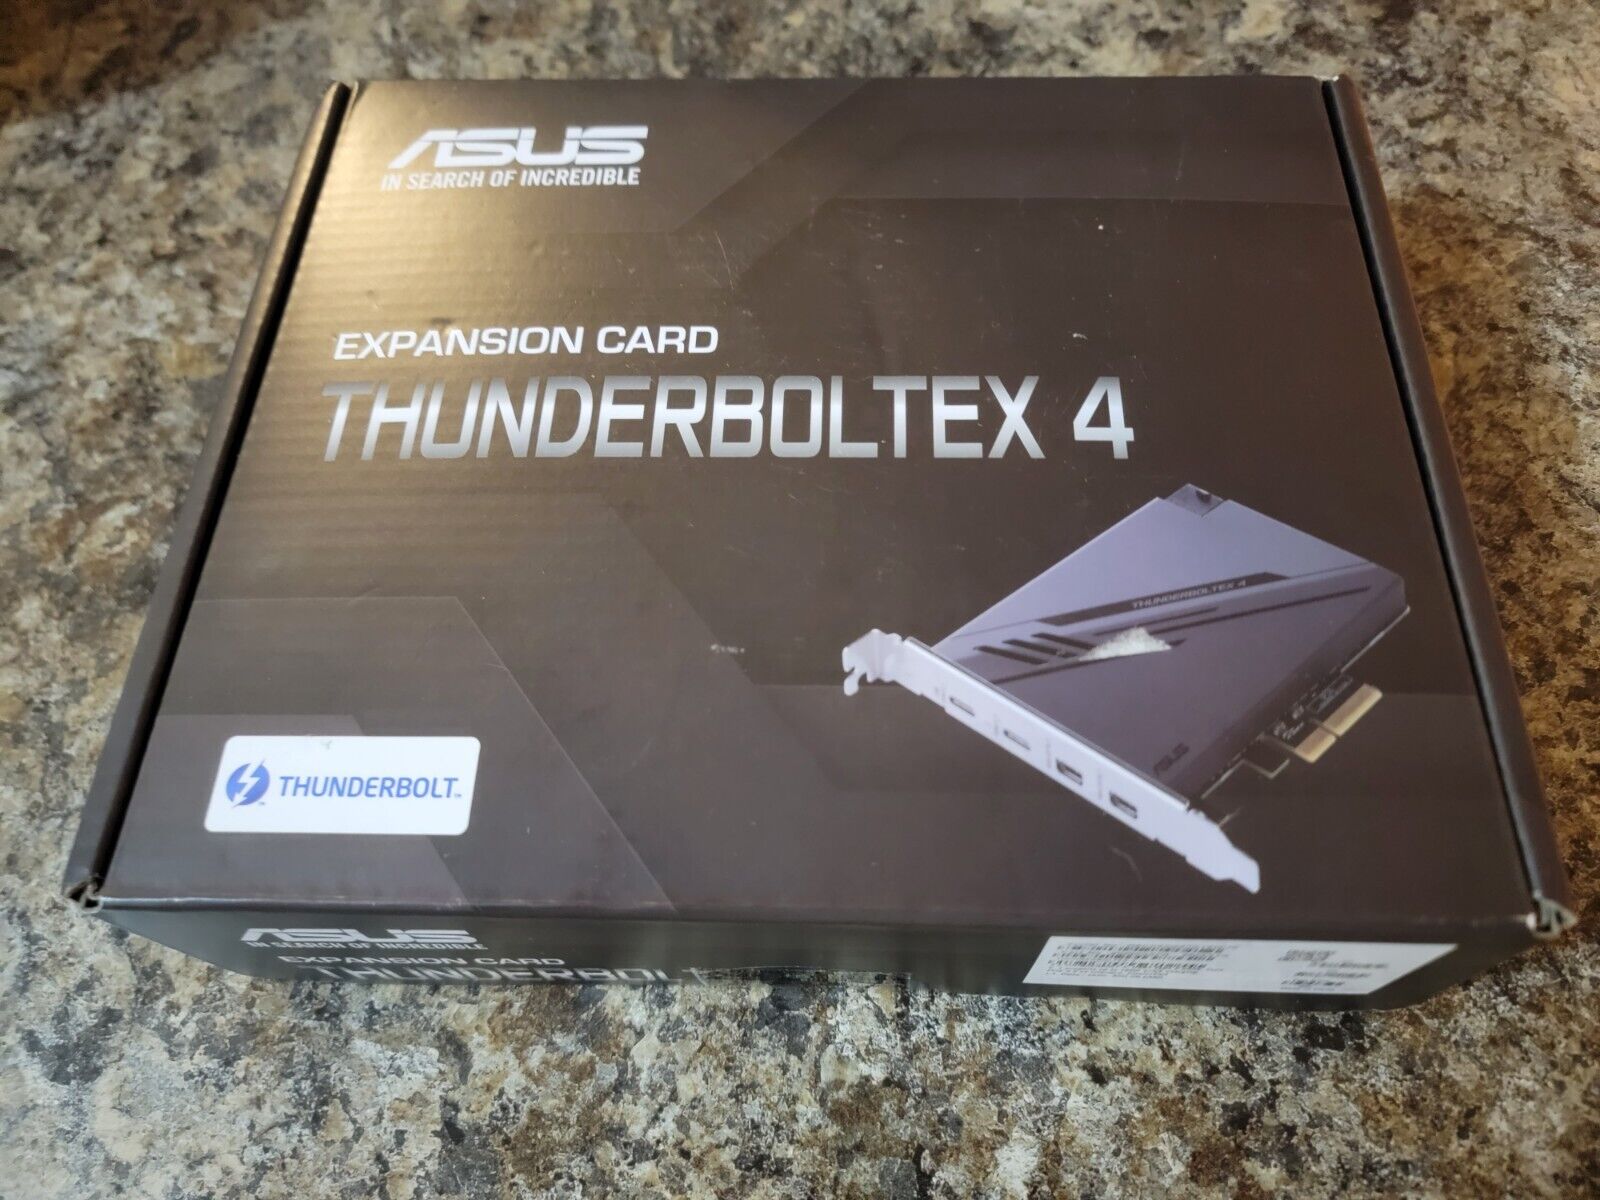 ASUS ThunderboltEX 4 Expansion Card Dual Thunderbolt 4 USB‑C Ports PCIe 3.0 x4